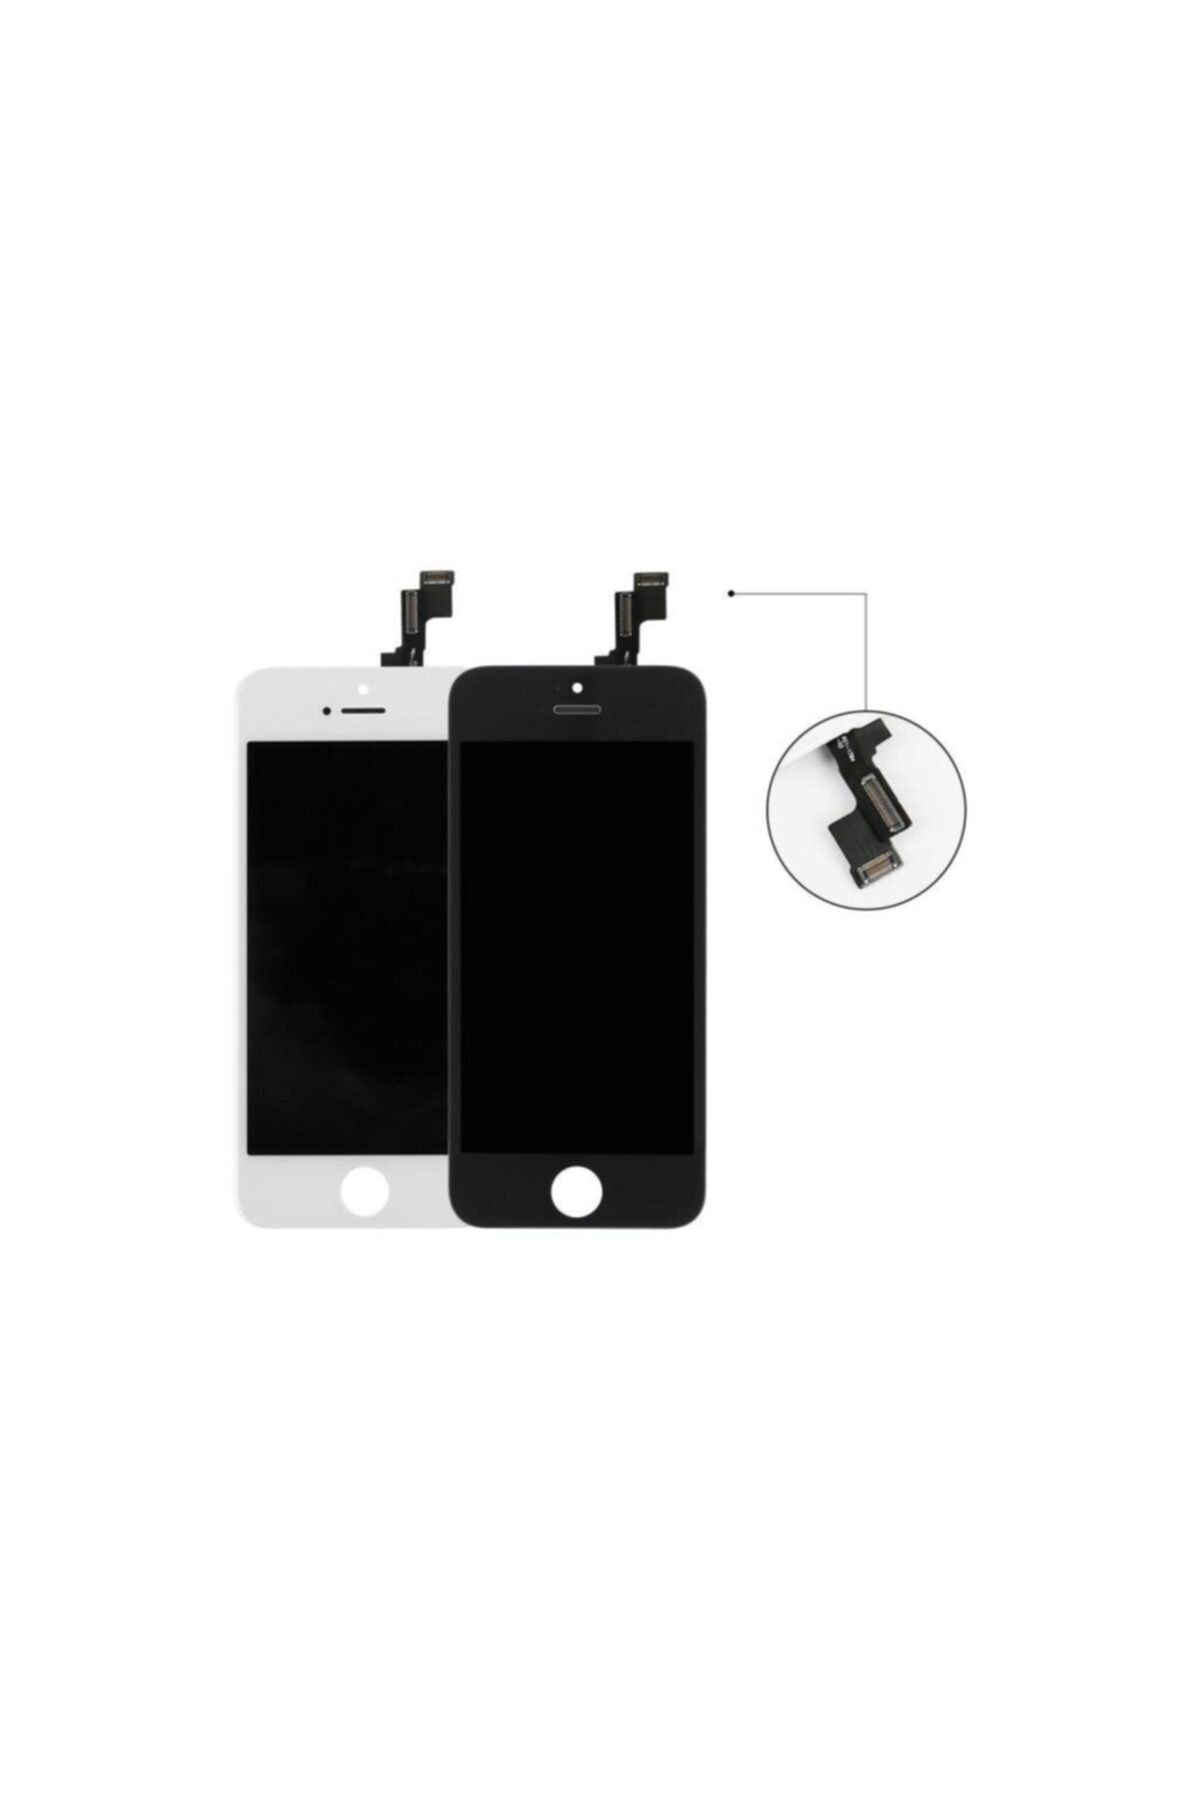 Meier Ekranbaroni Apple Iphone 5s Lcd Ekran Dokunmatik Cam Siyah